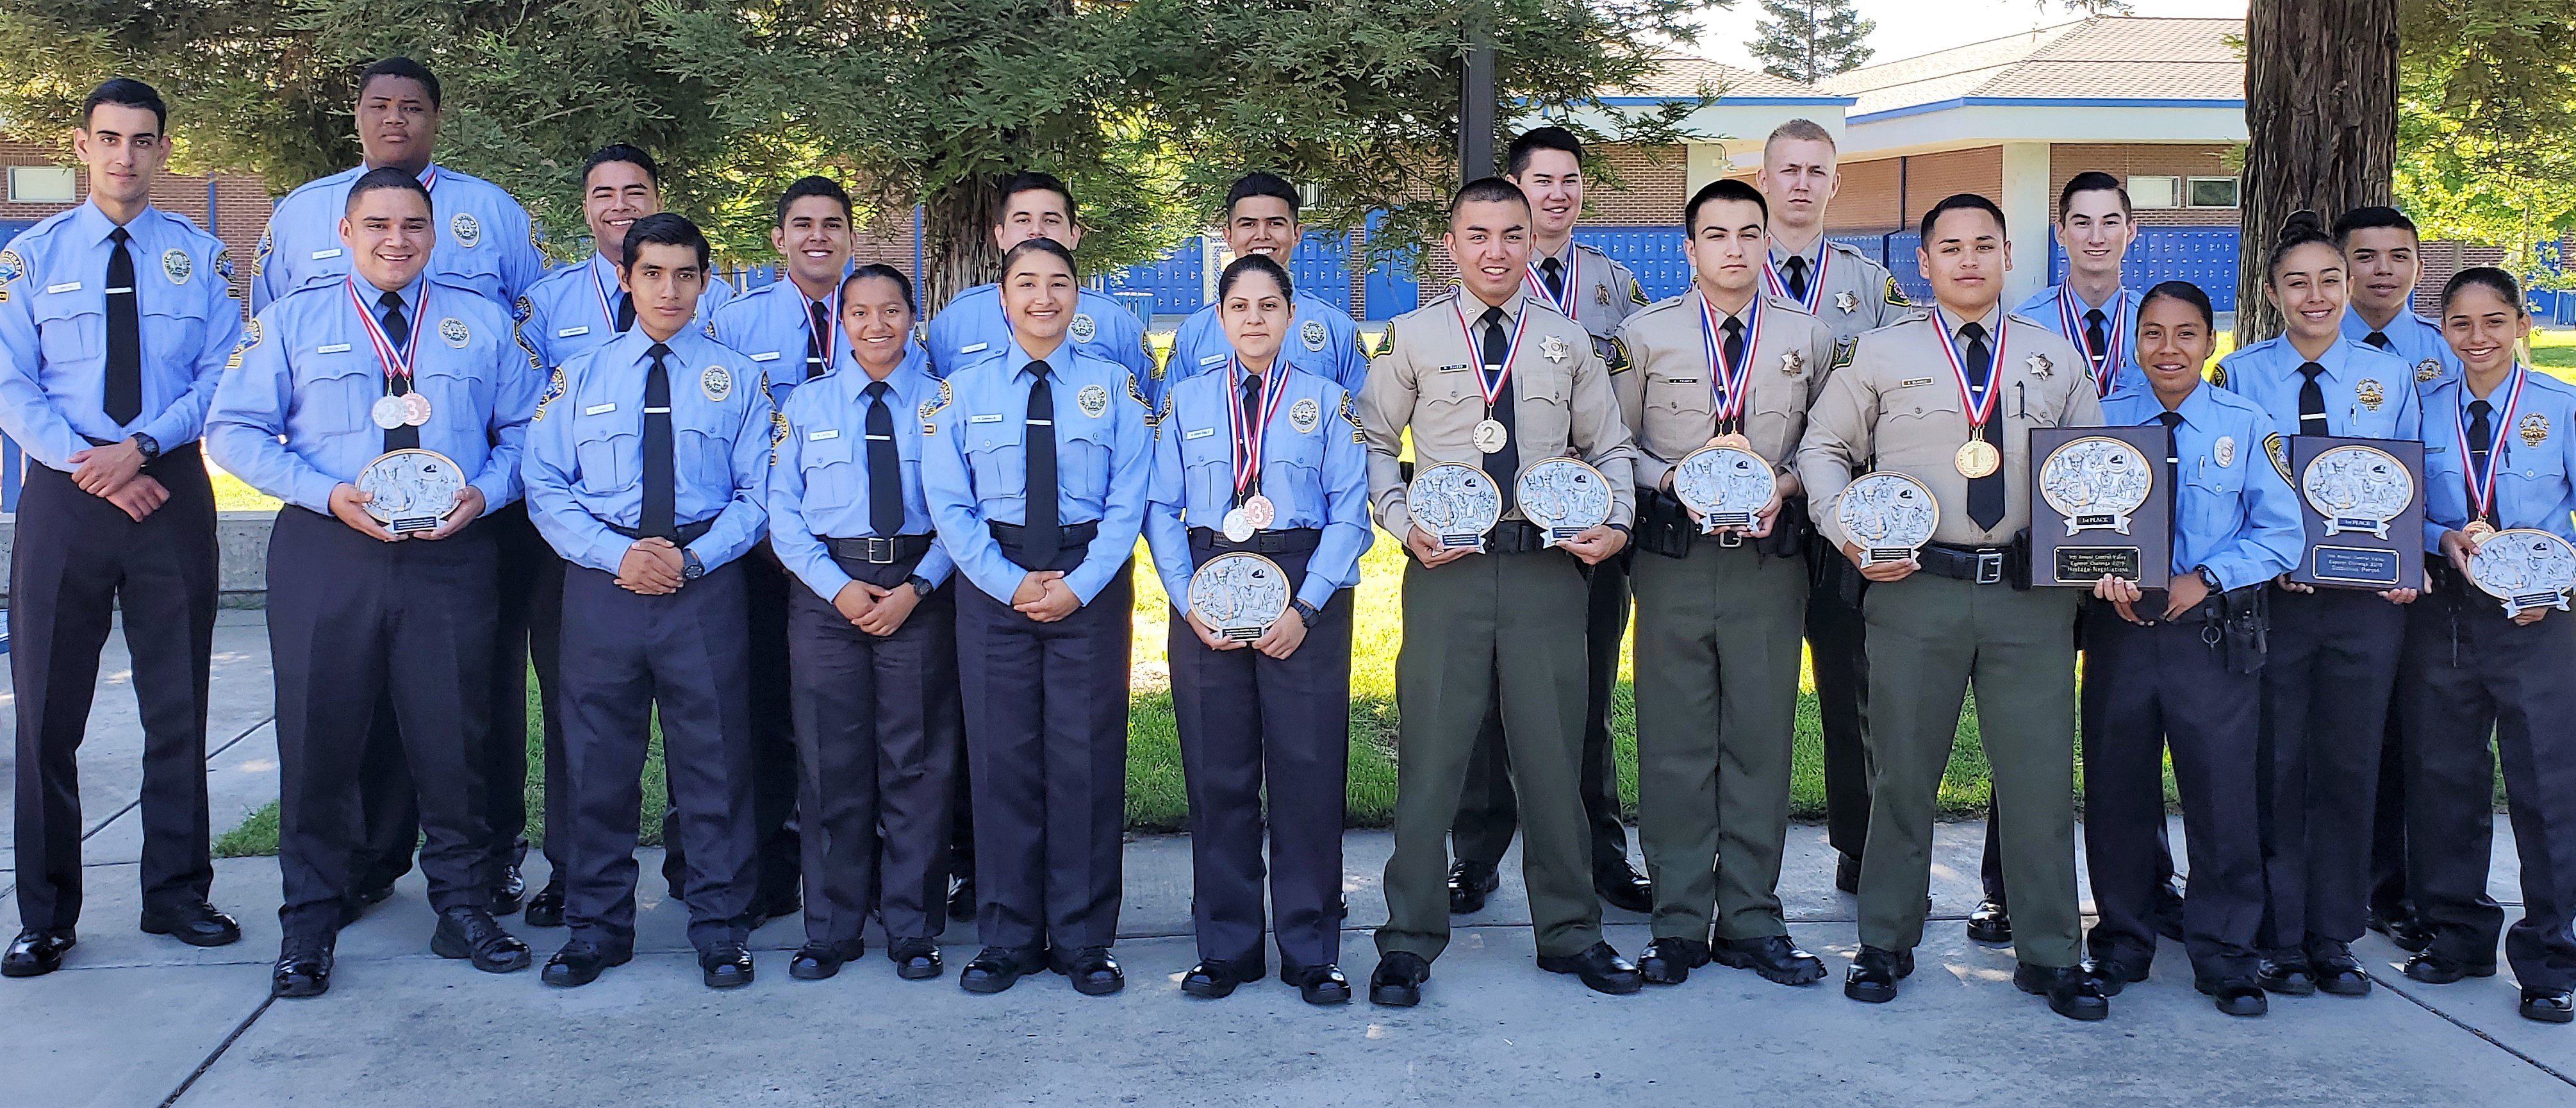 Sheriff’s Explorers win awards in annual contest